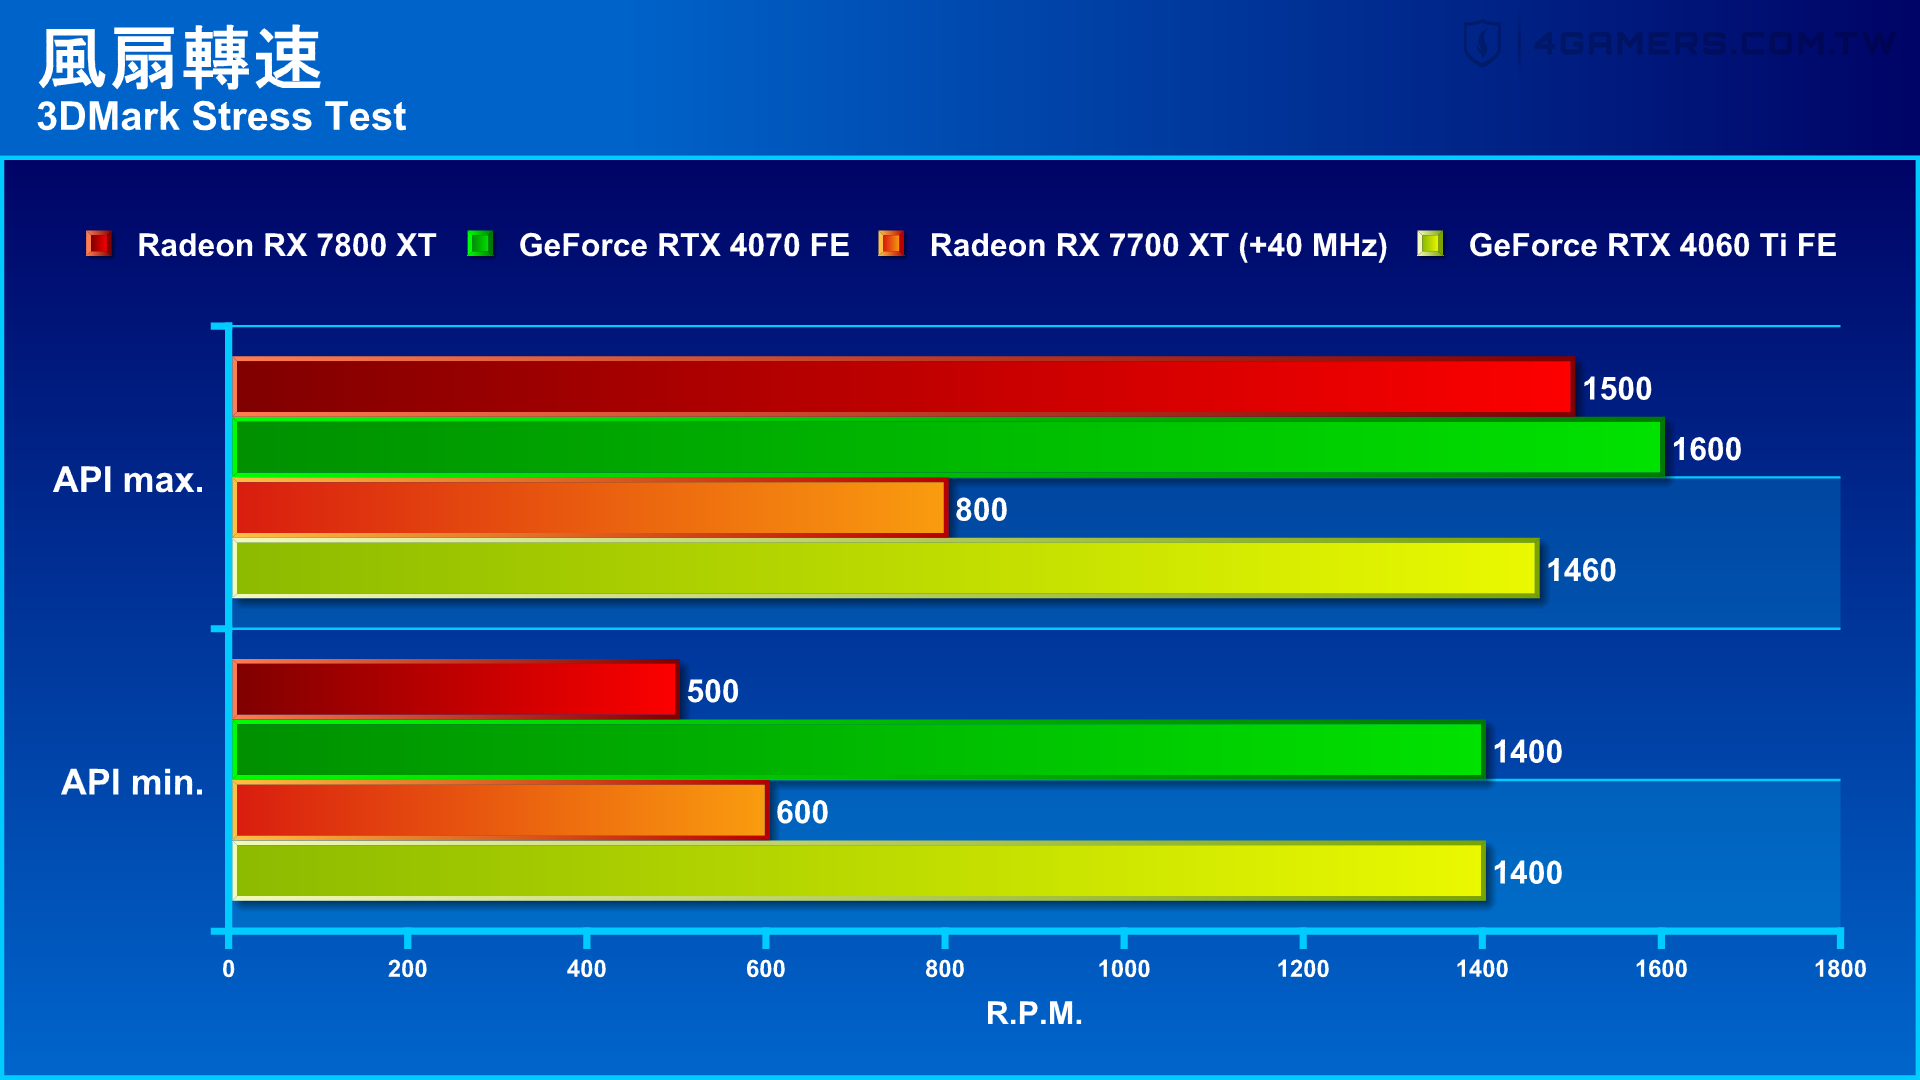 AMD Radeon RX 7800 XT and RX 7700 XT